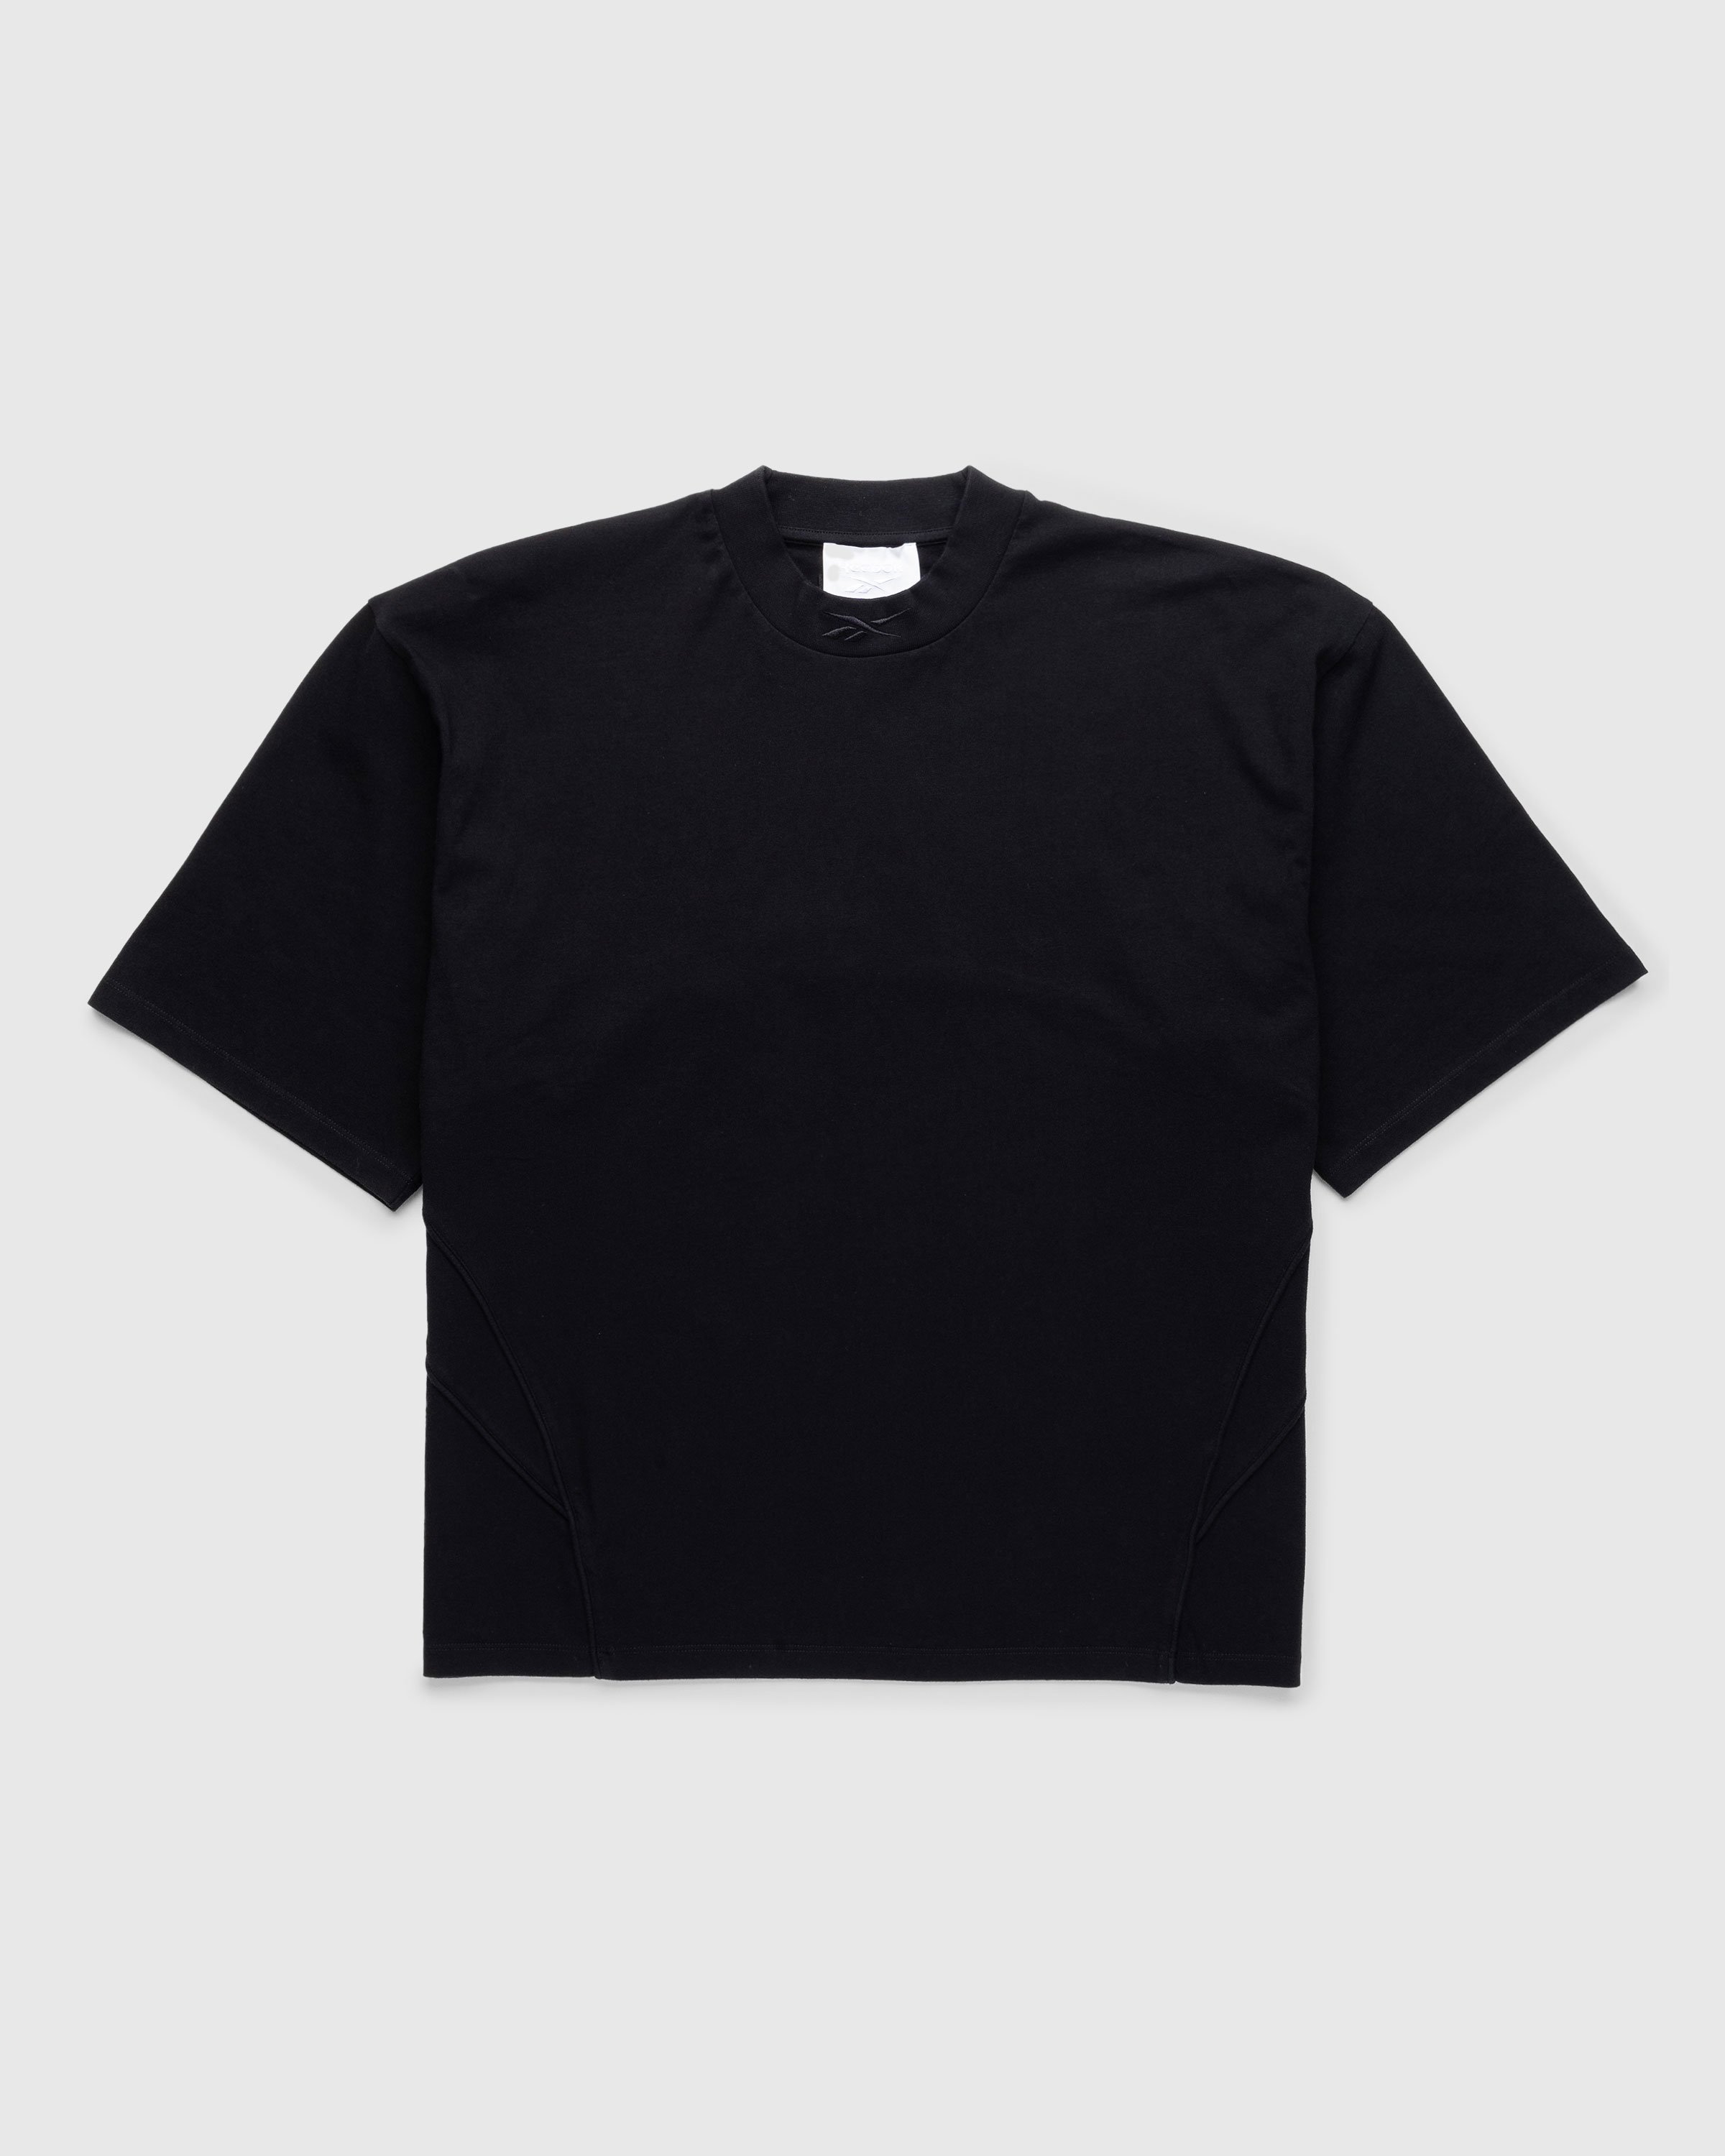 Reebok - Piped T-Shirt Black - Clothing - Black - Image 1